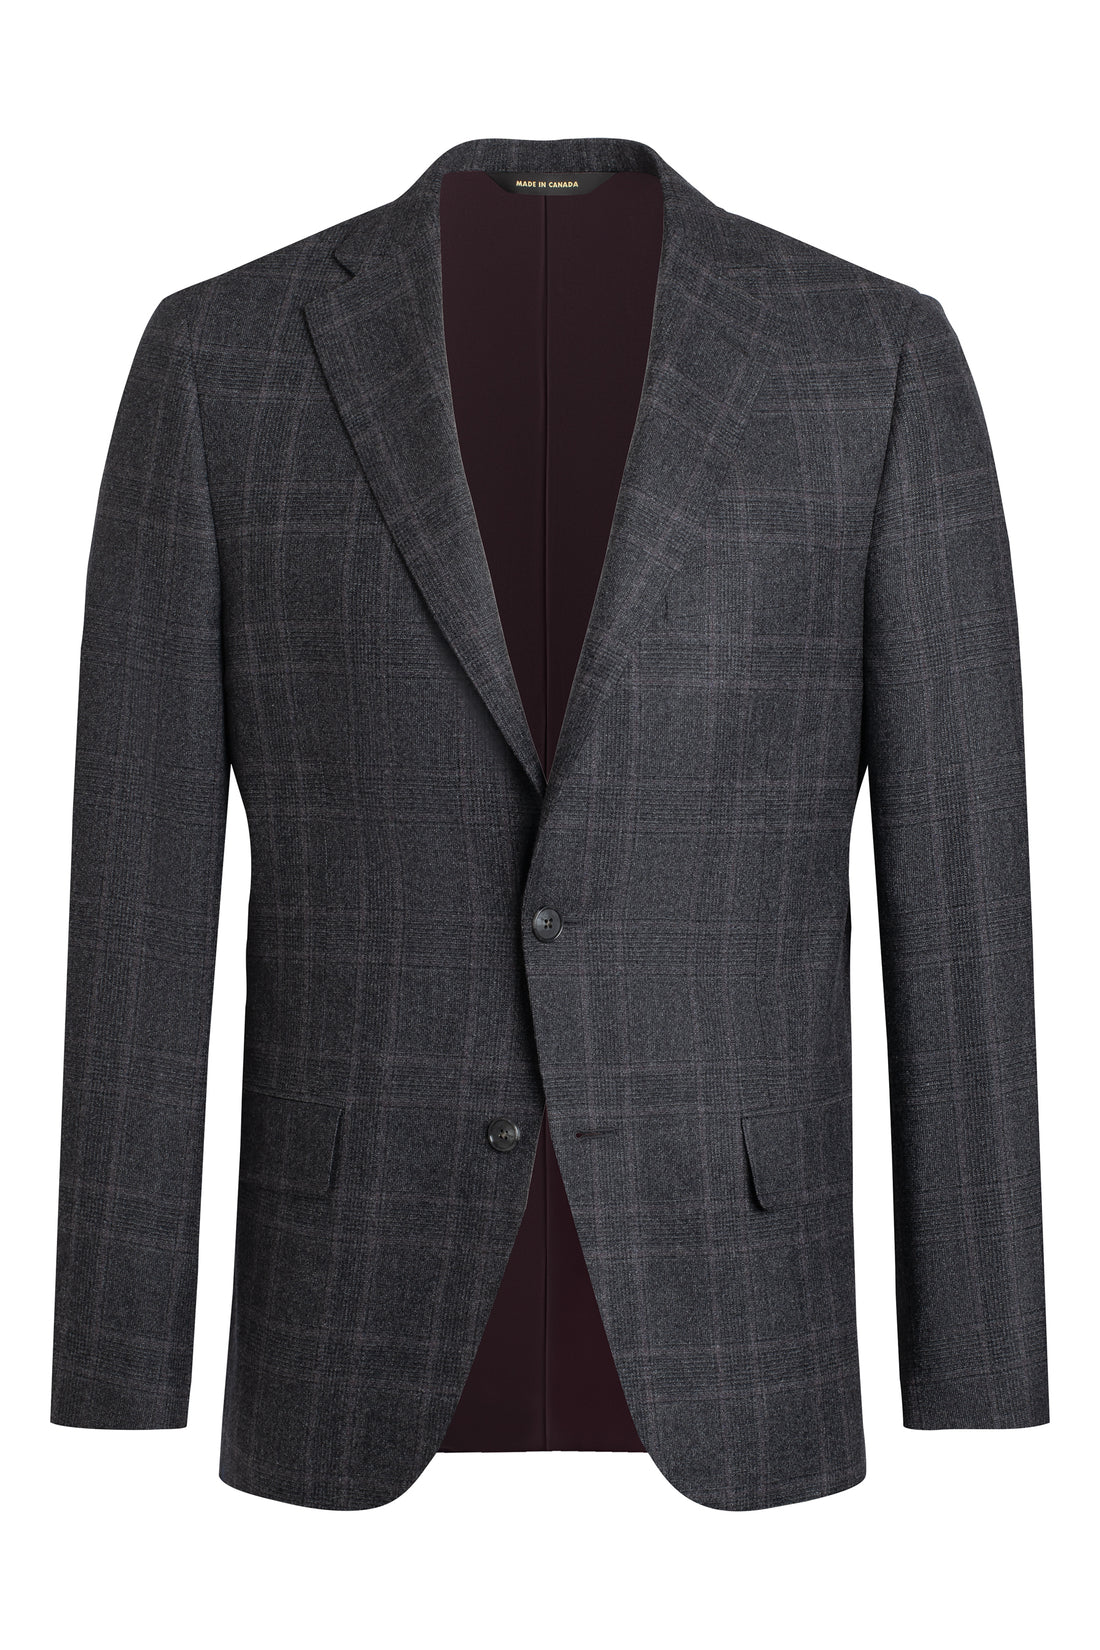 Charcoal Flannel Plaid Trofeo Suit